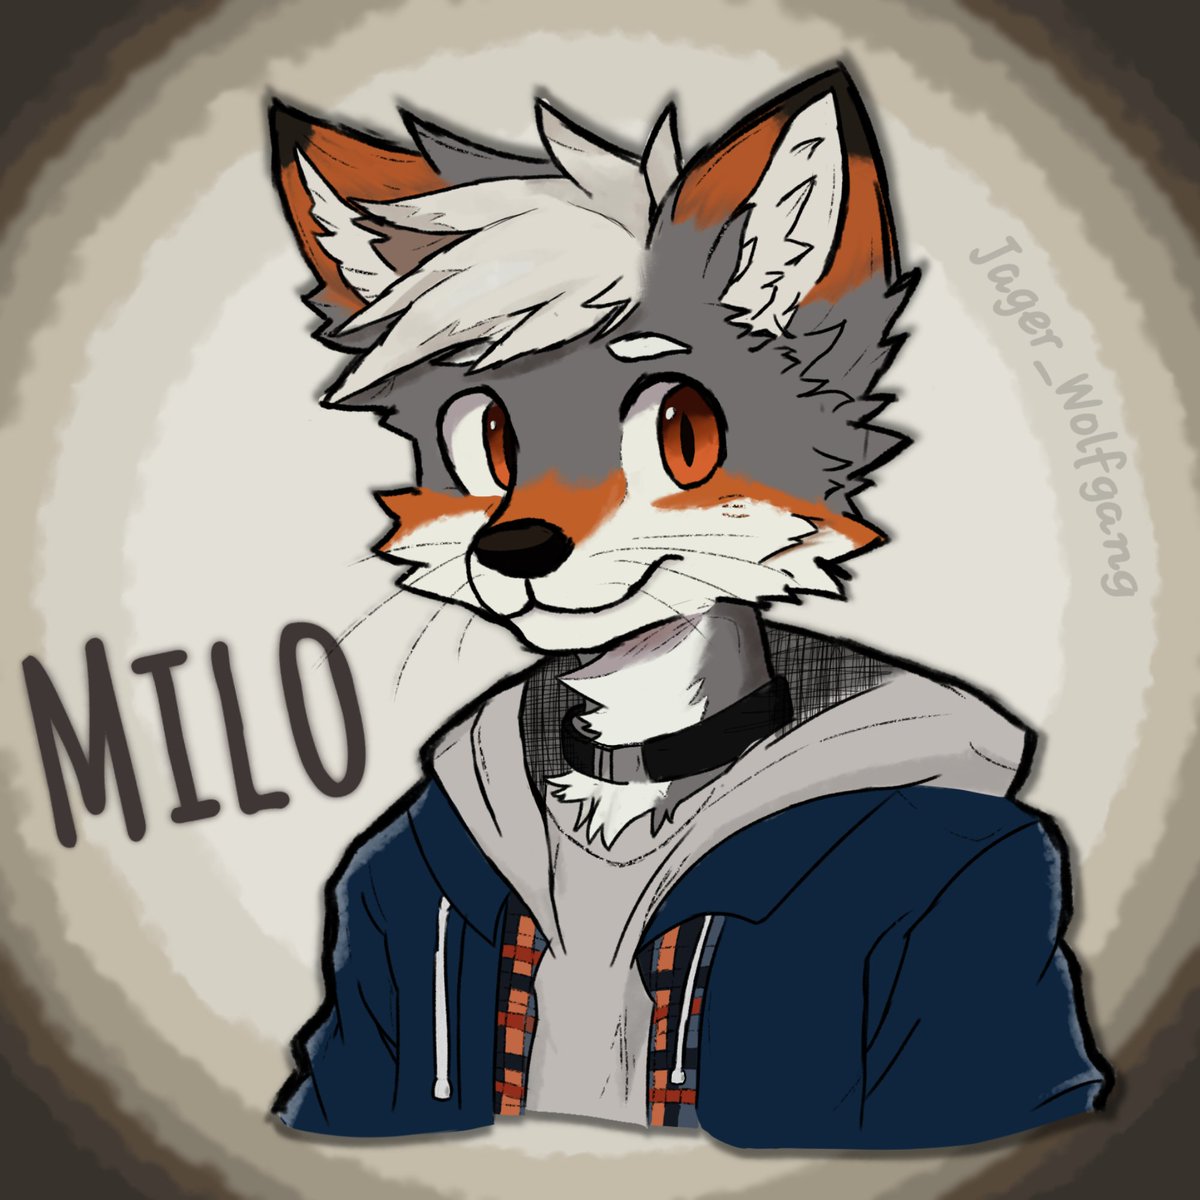 Milo Redwood
A wittle foxy boi. Ain't he adorable?